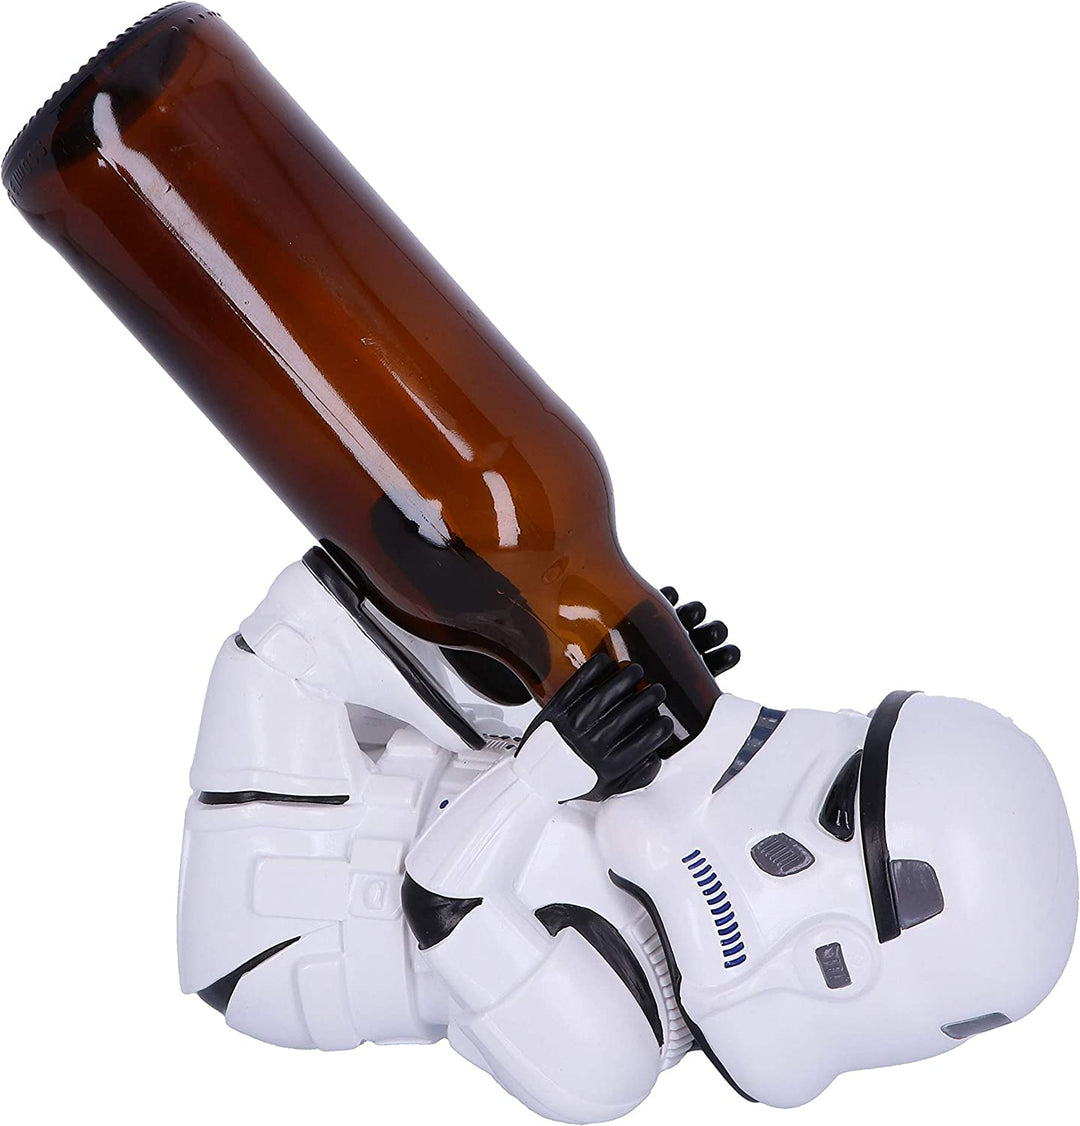 Nemesis Now Original Stormtrooper Sci-Fi Wine Bottle Holder Figurine, White, One Size